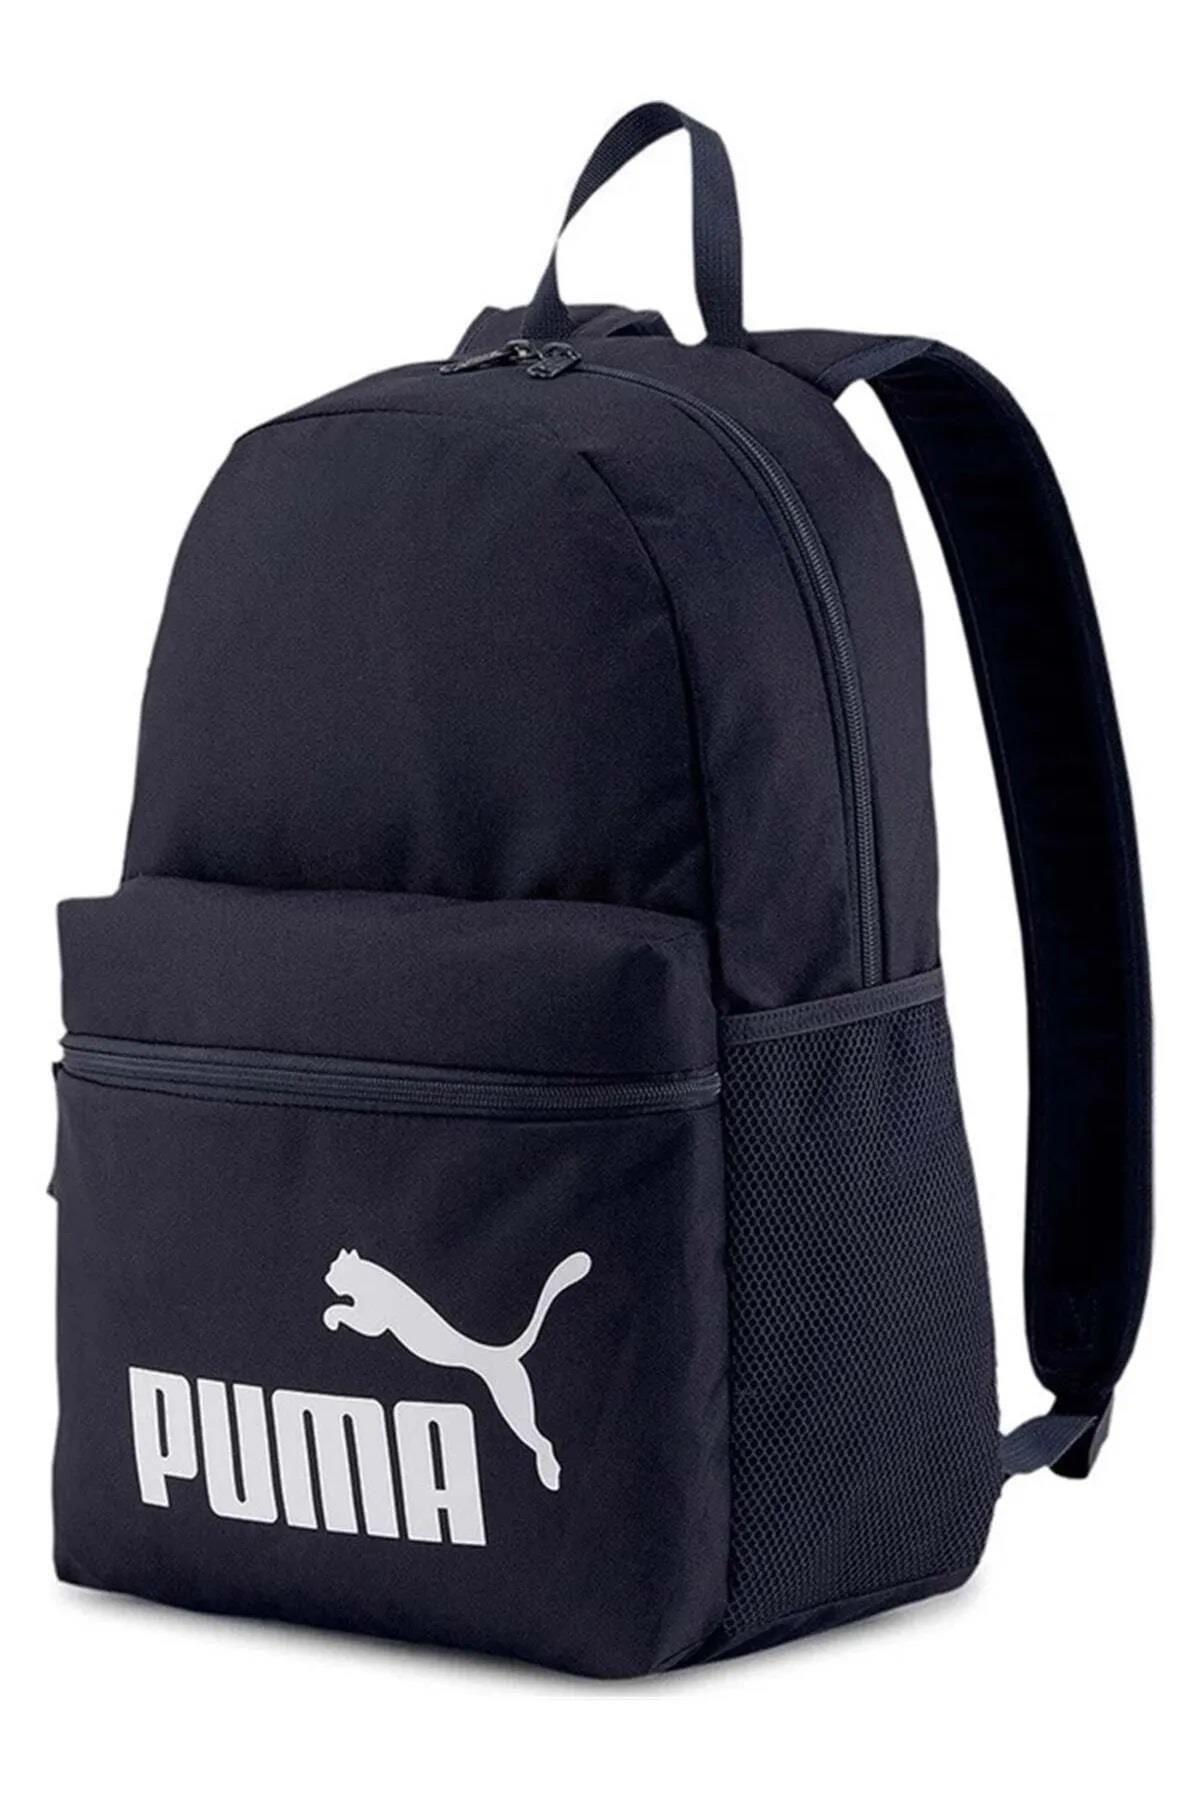 Puma phase backpack siyah okul sırt çantası 079943 01